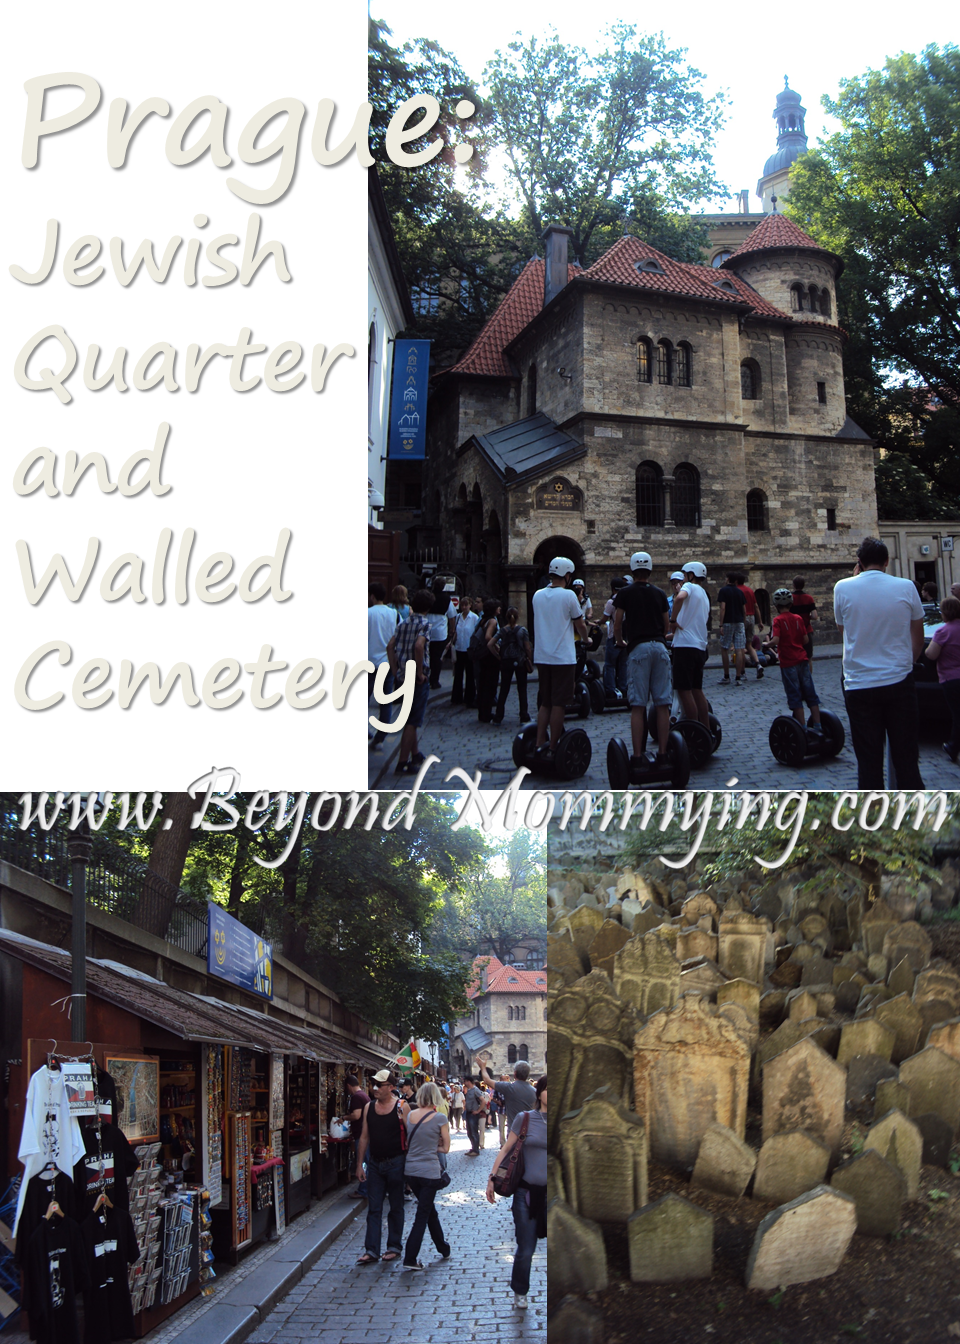 prague jewsih quarter and walled cemetery